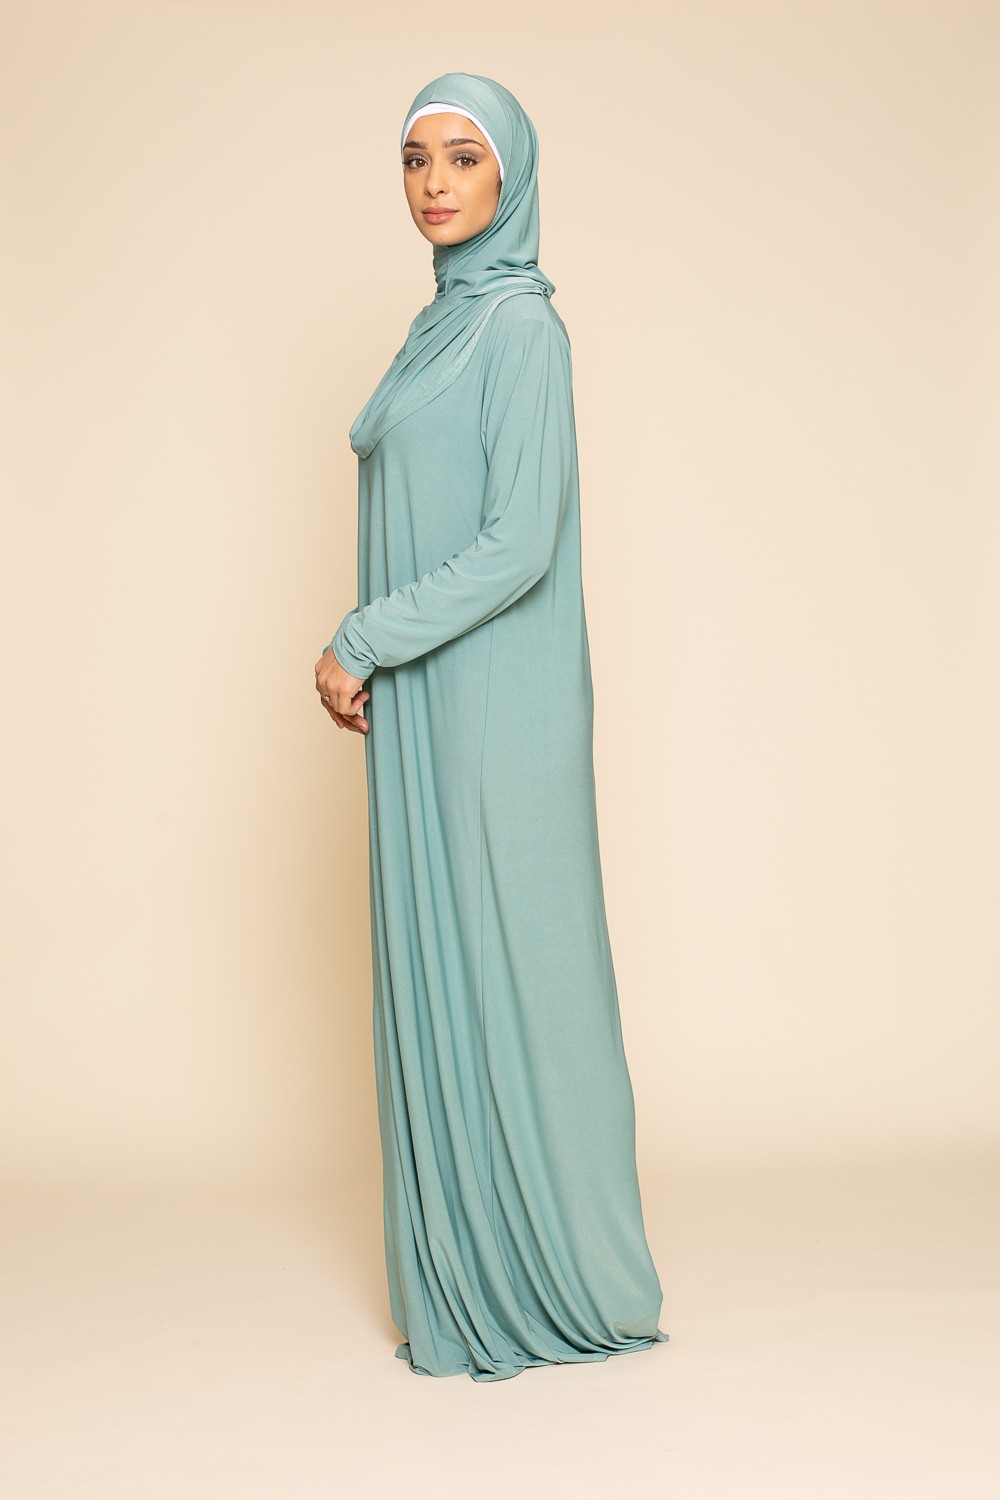 Robe prière avec hijab enfilable collection ramadan